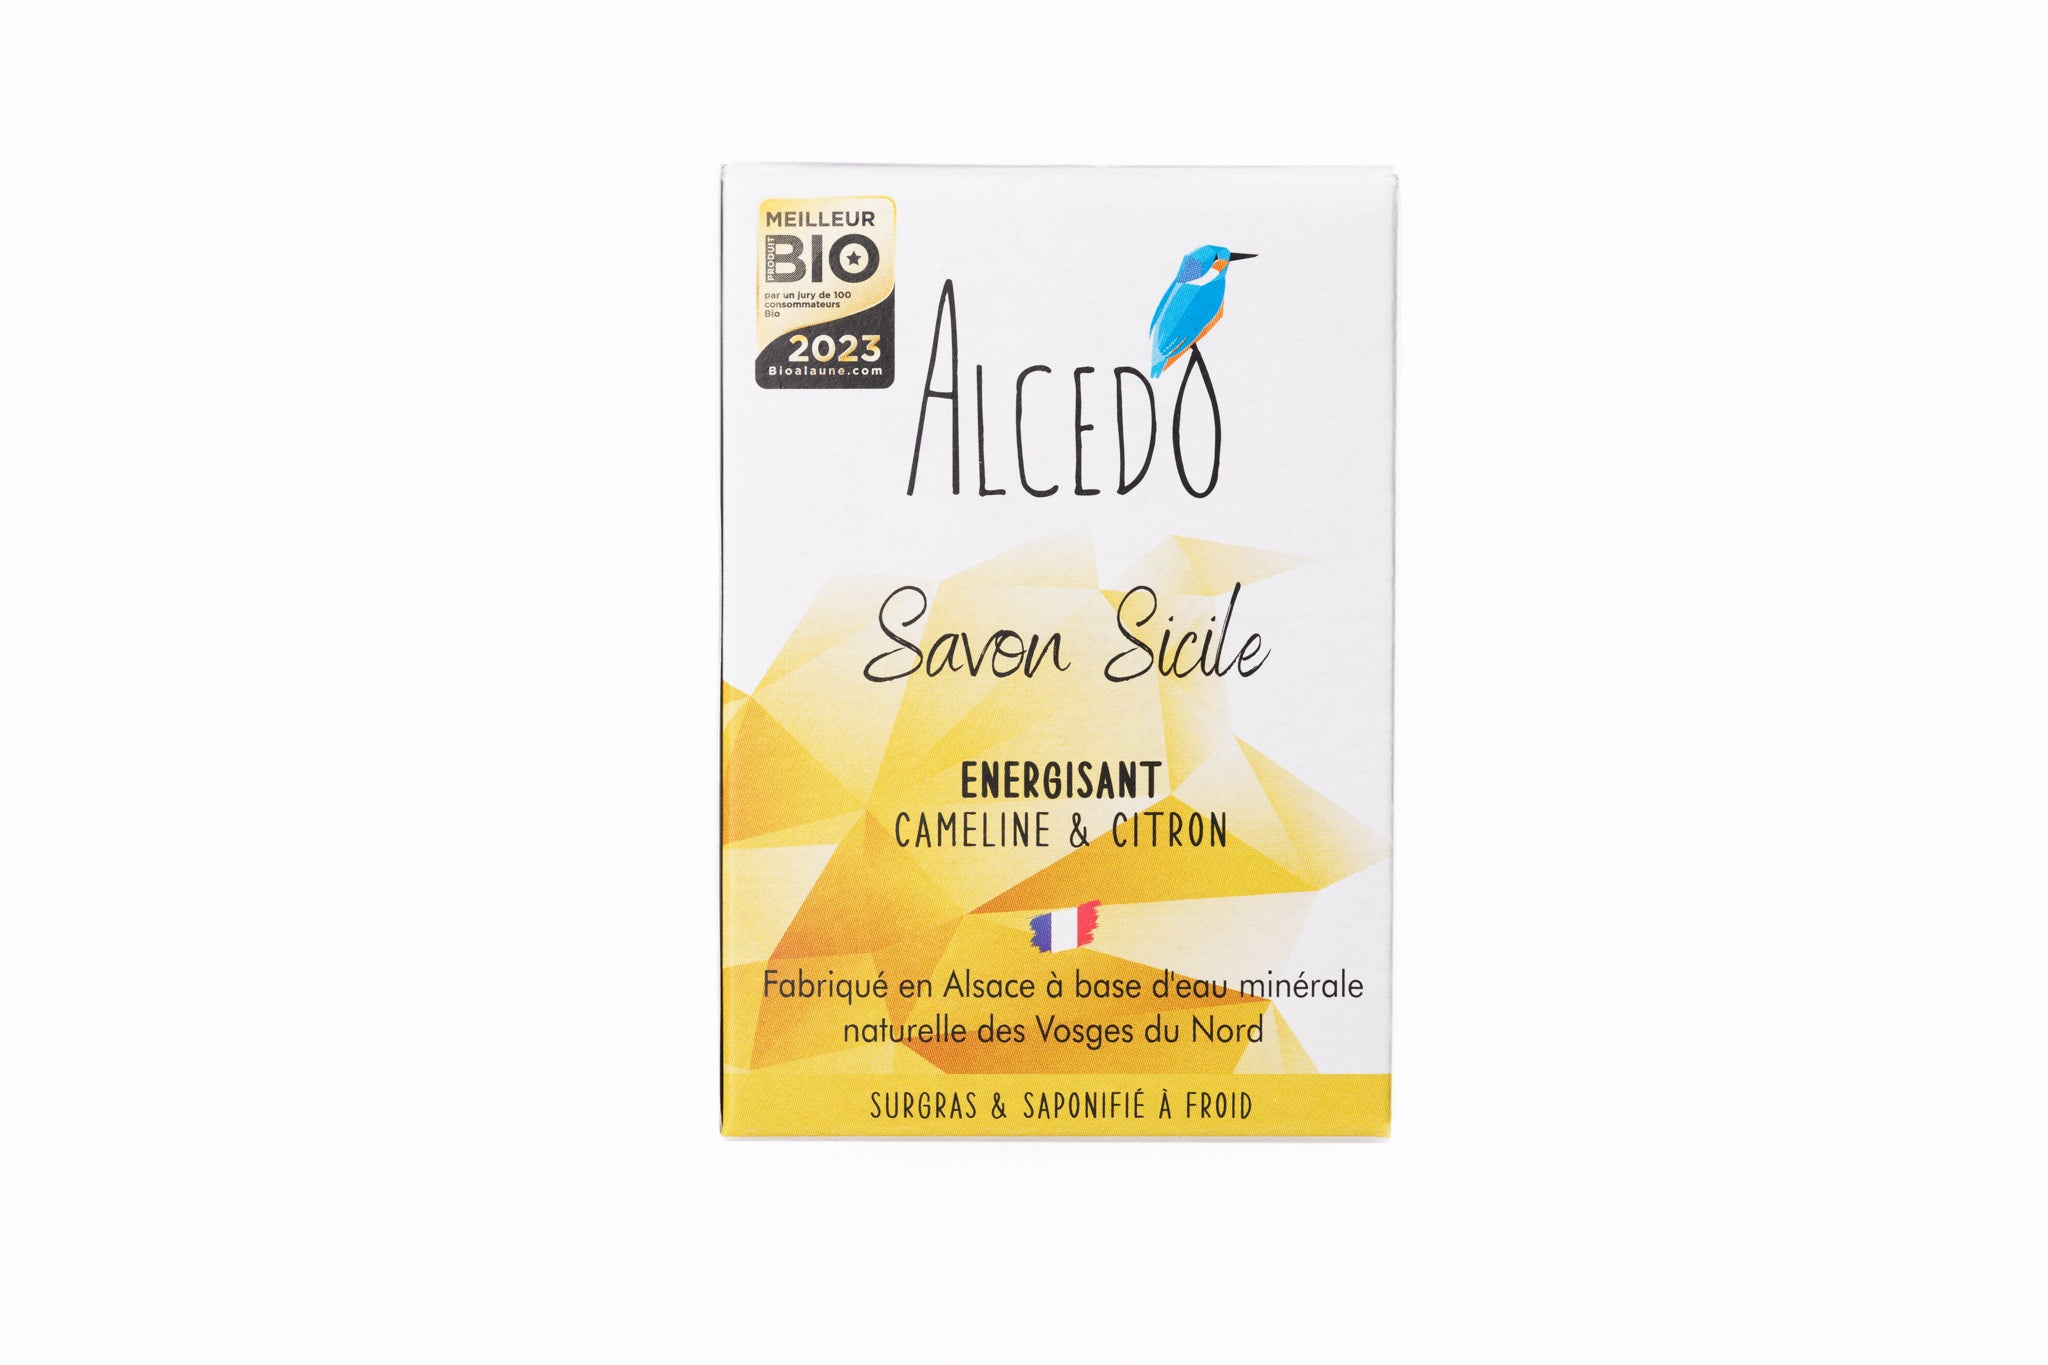 Savon Sicile - Énergisant - Cameline & Citron Alcedo